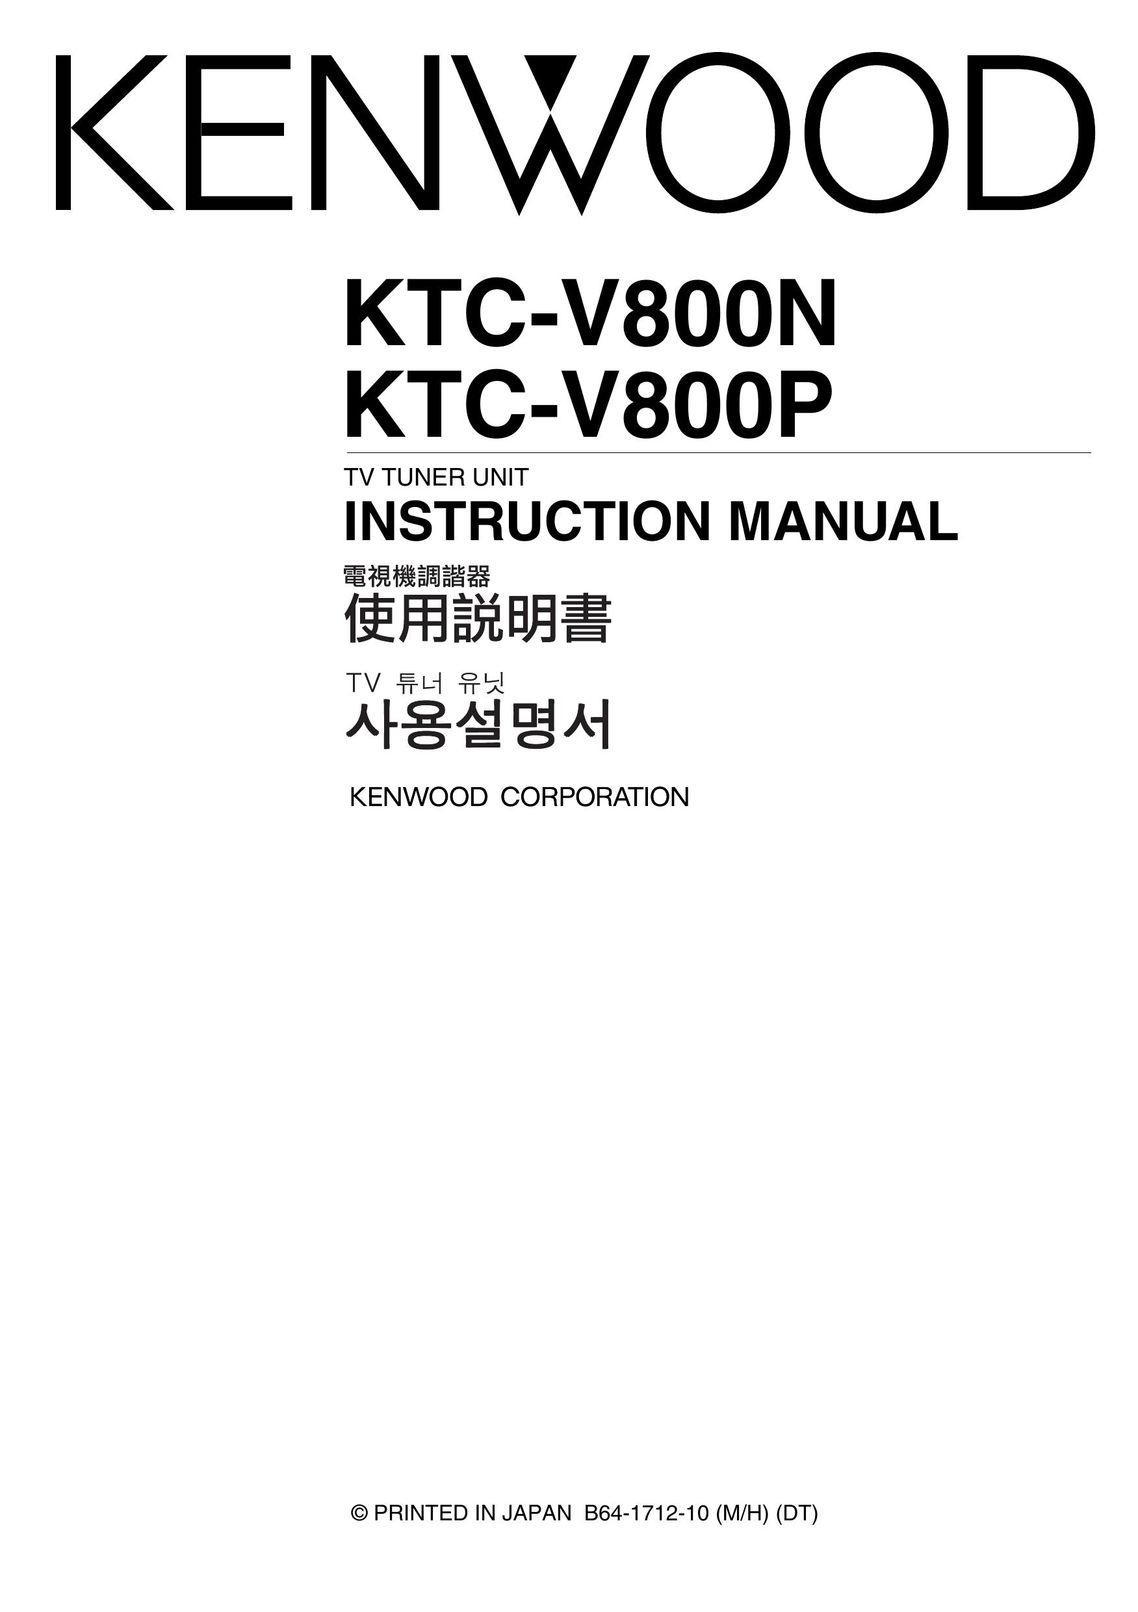 Kenwood KTC-V800P Car Satellite TV System User Manual